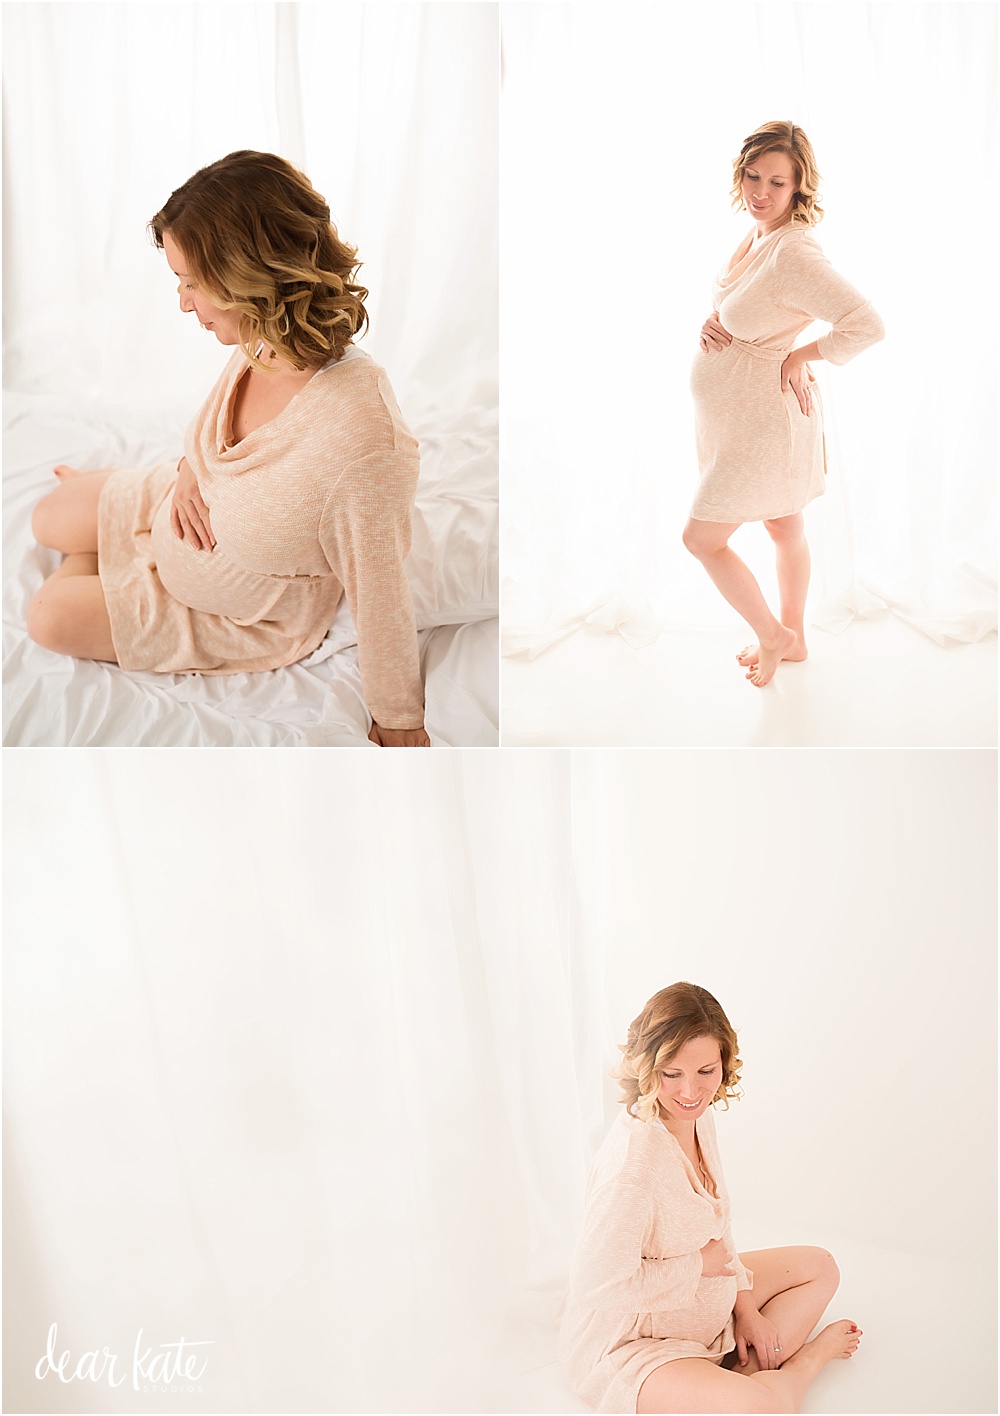 Simple timeless classic portraits pregnancy photos